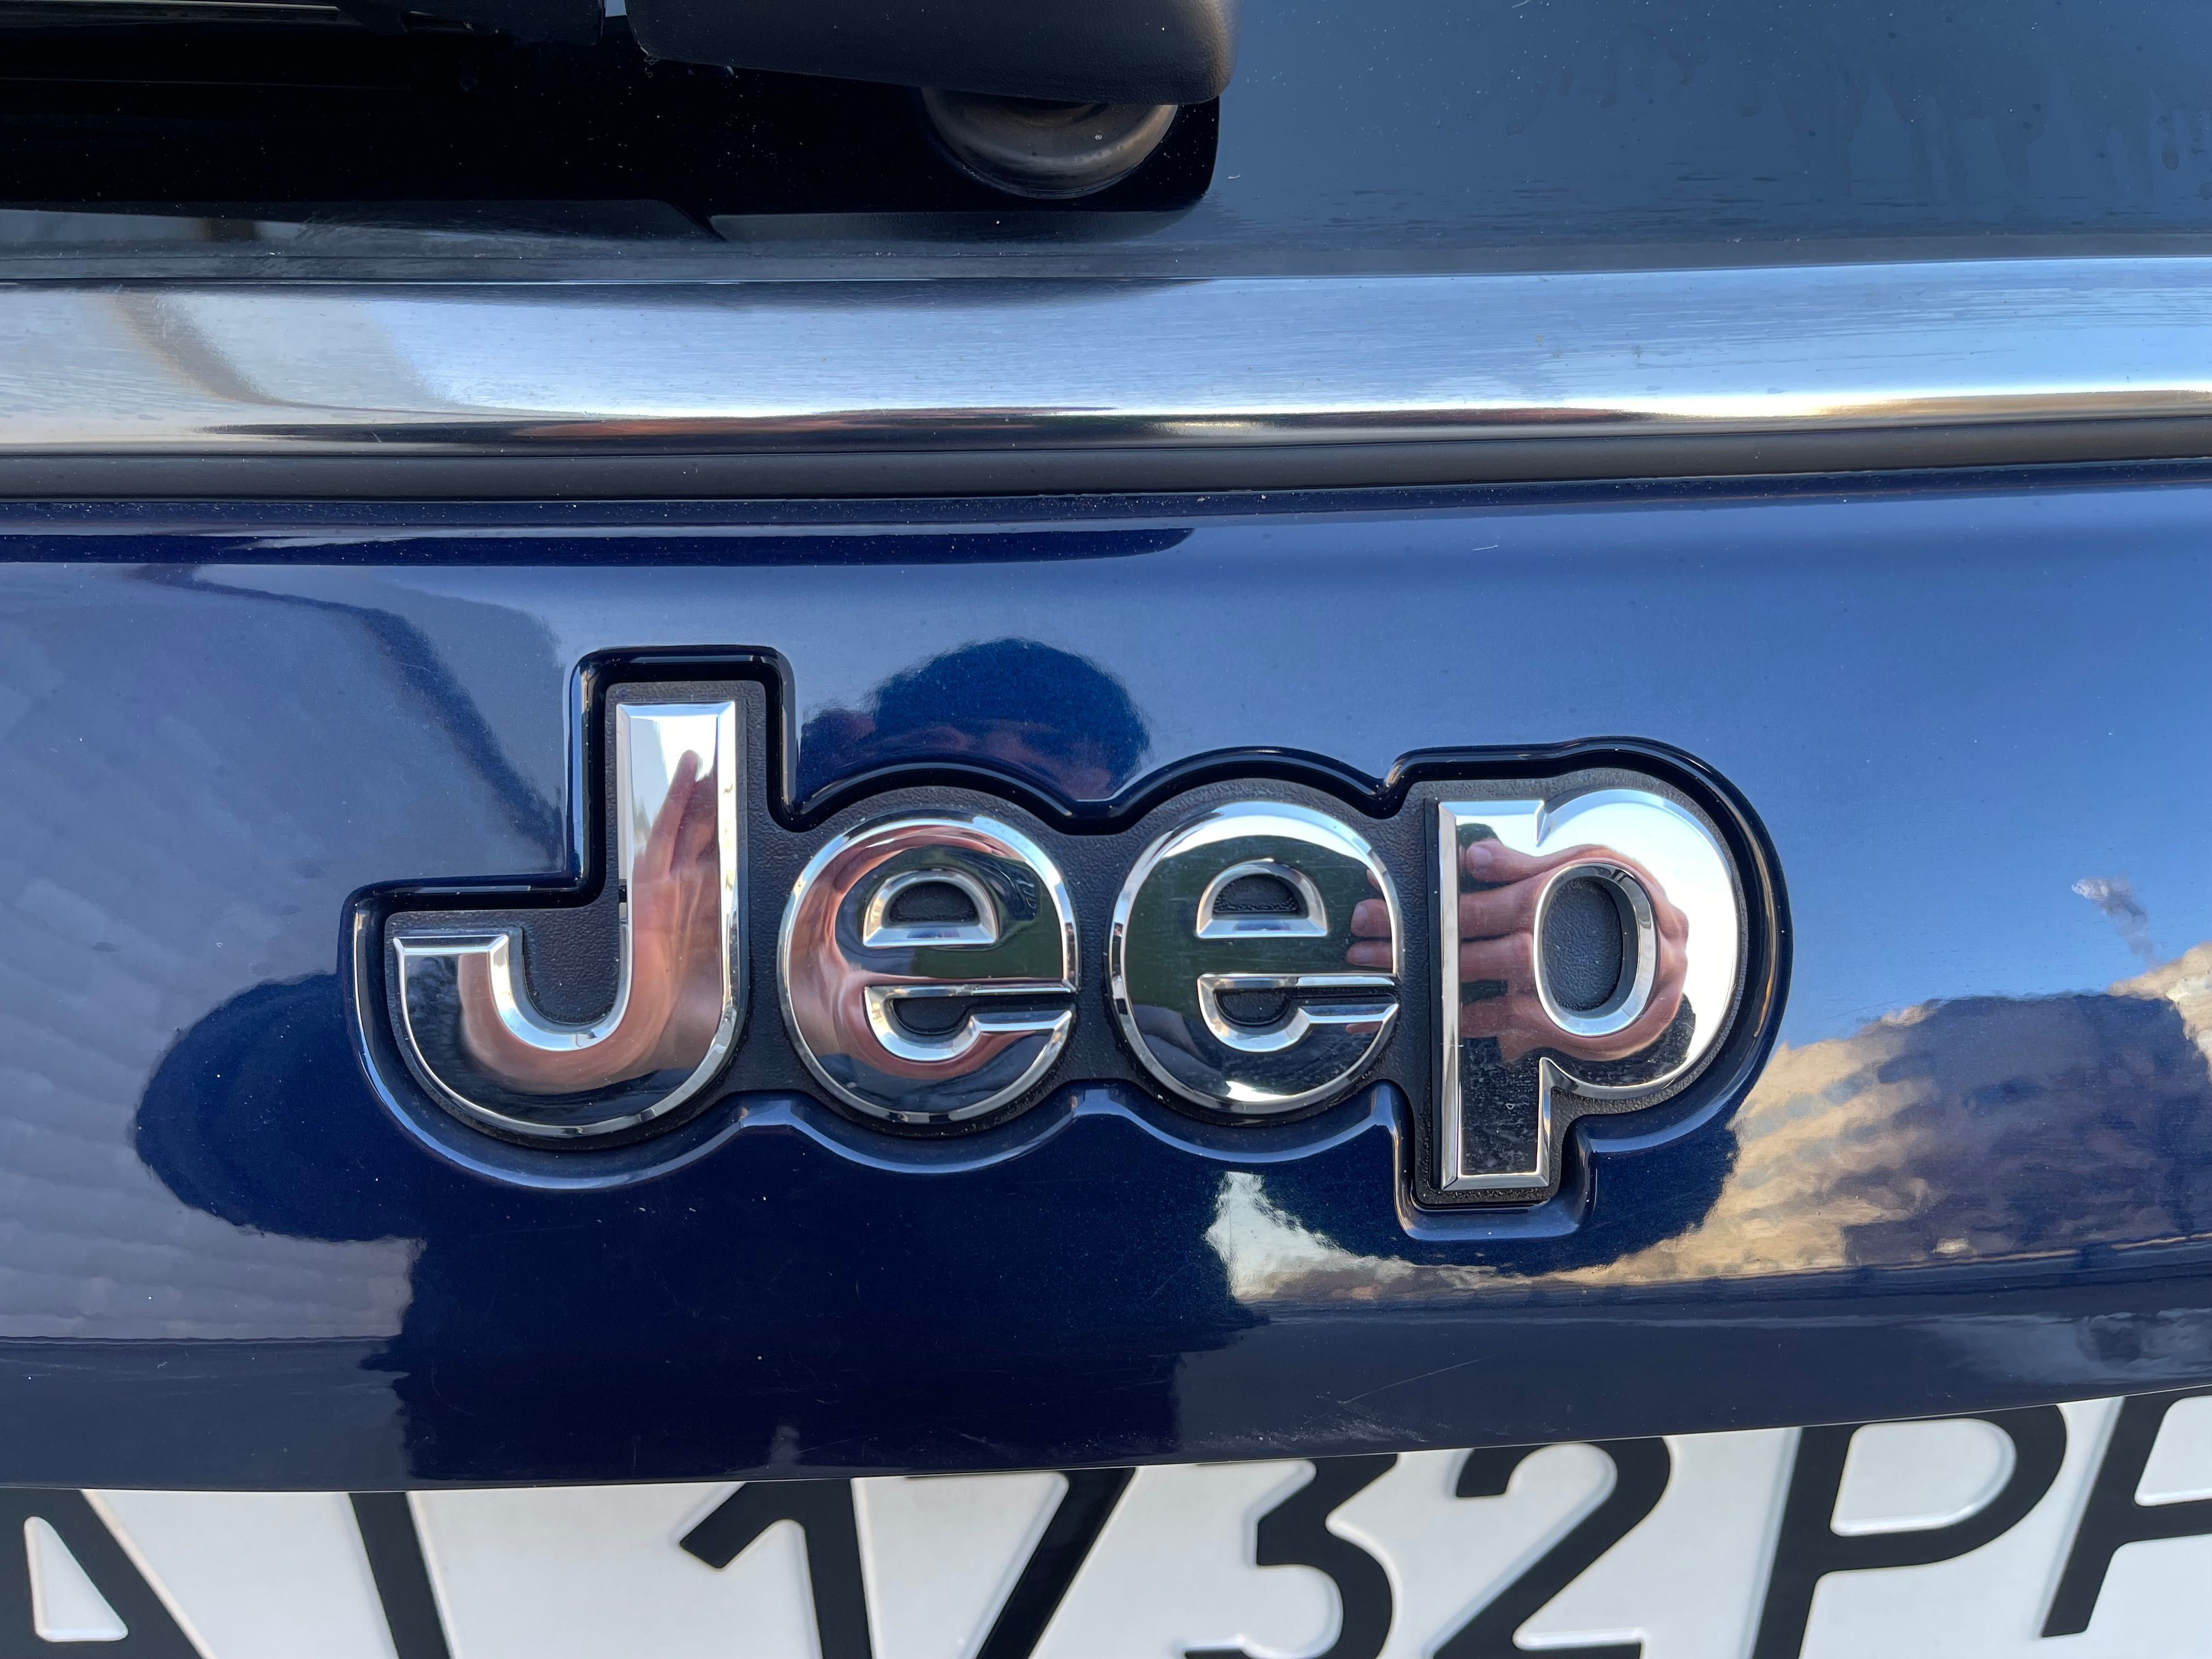 Jeep Compass 2020